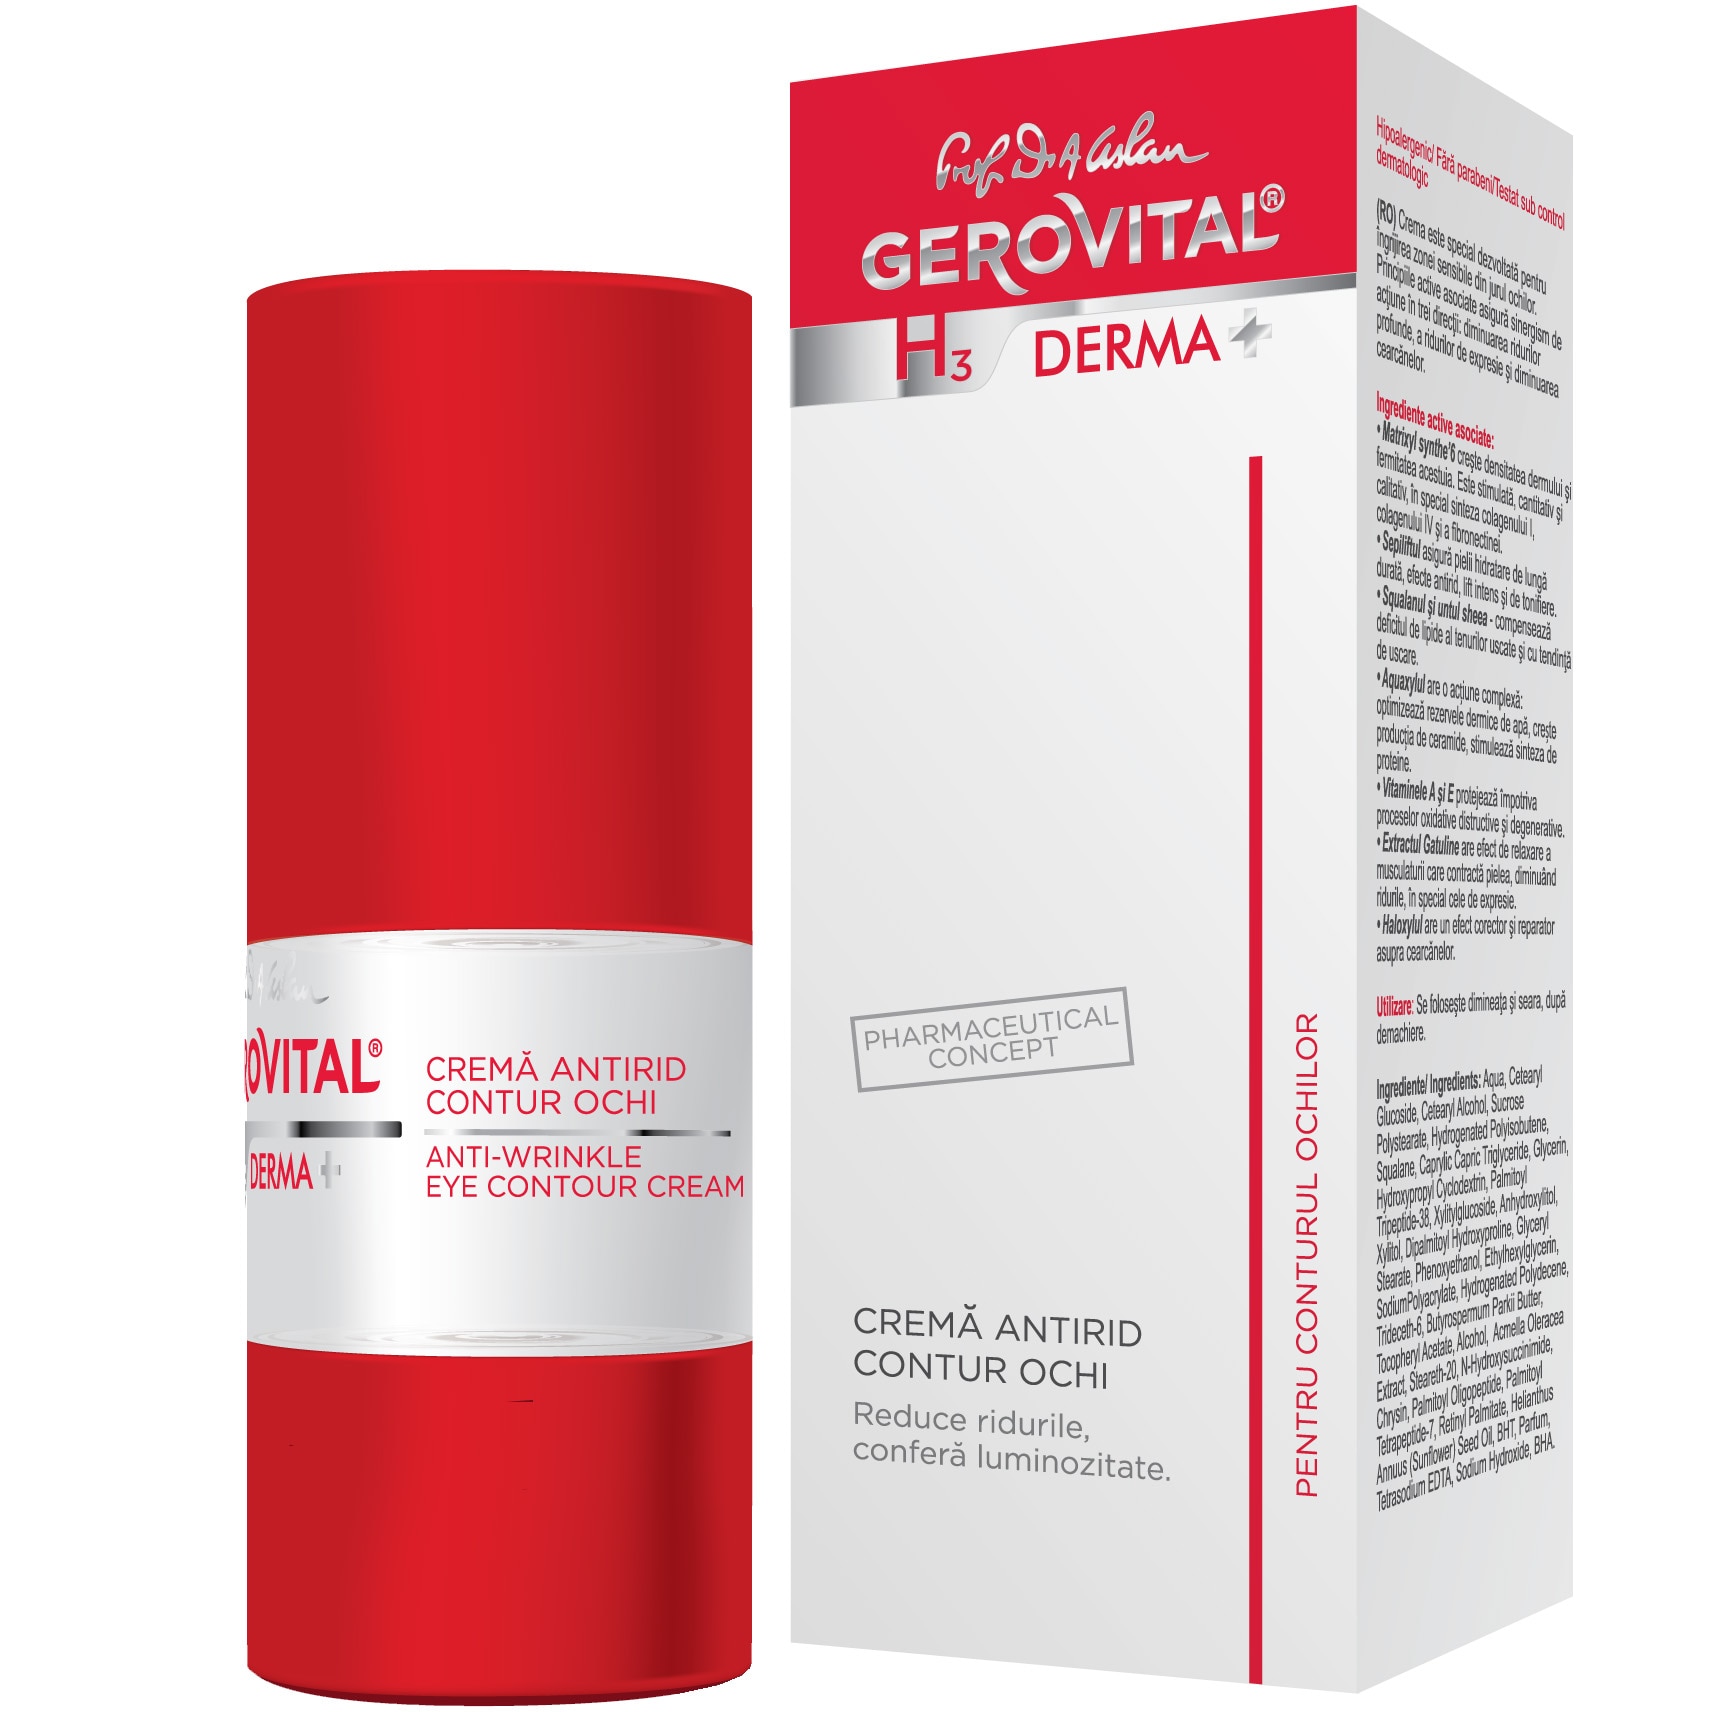 Review: Crema antirid contur ochi Gerovital H3 Derma+ | By Dee make-up and more